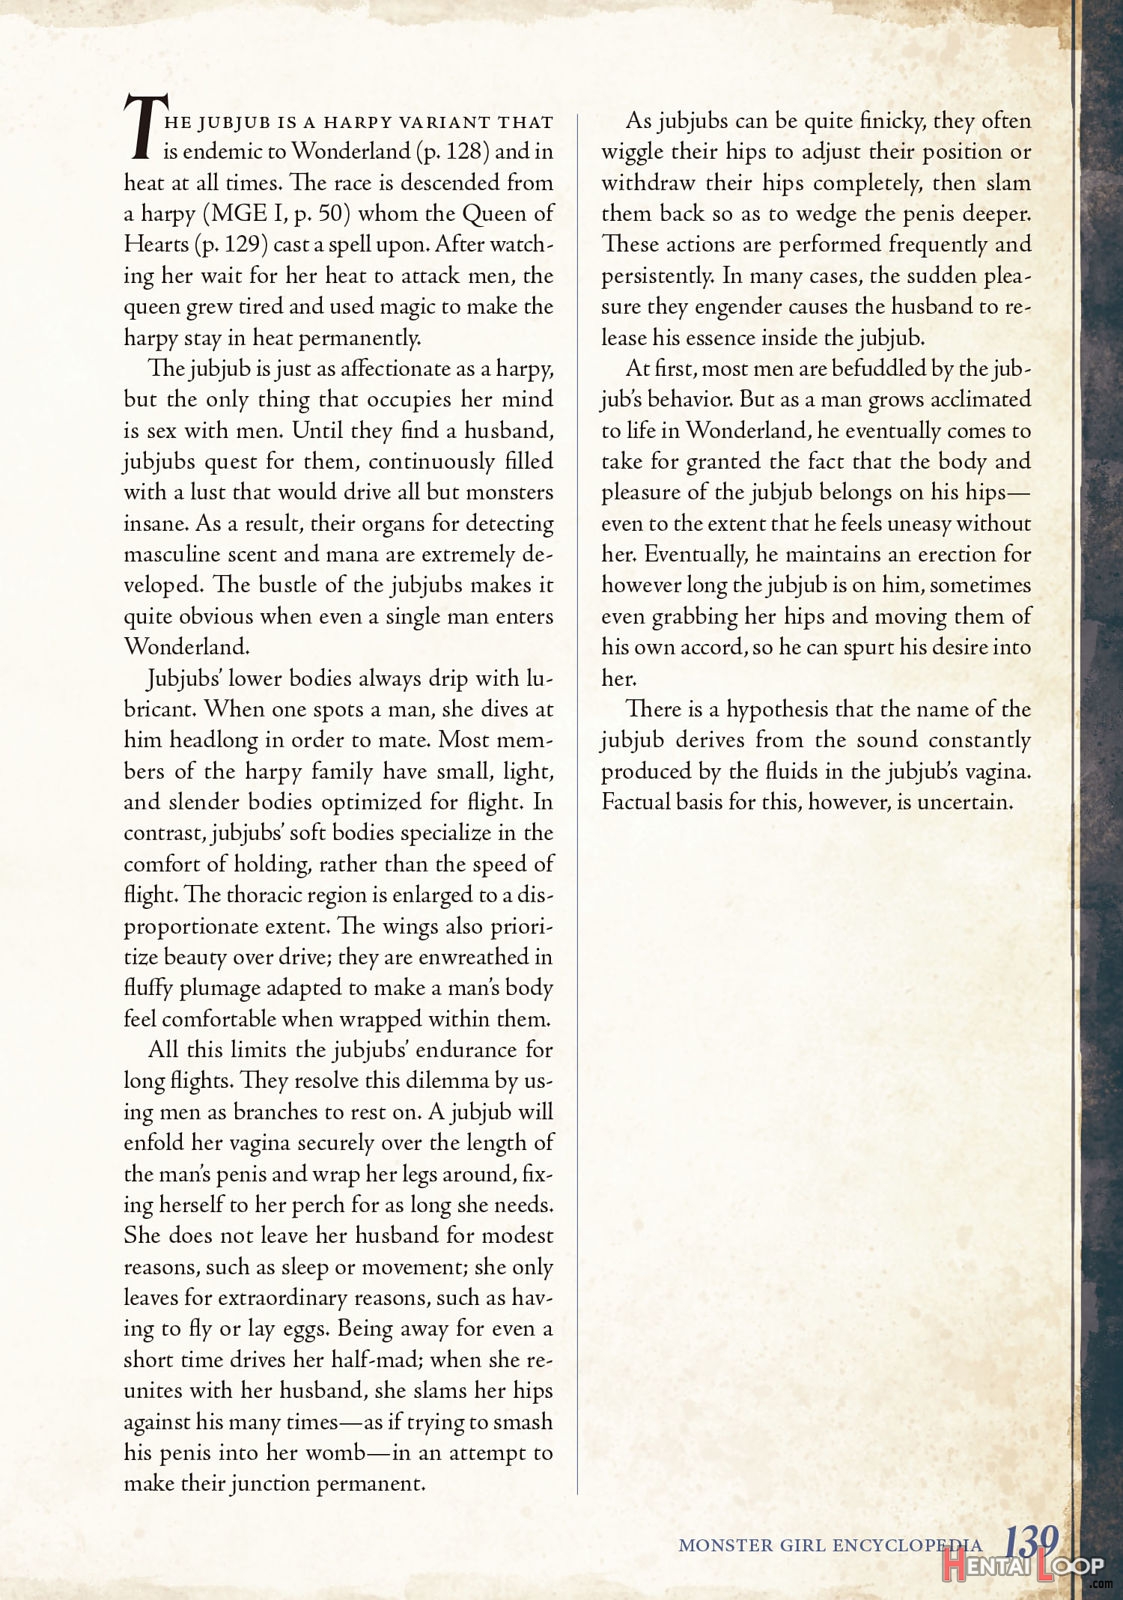 Monster Girl Encyclopedia Vol. 2 page 140